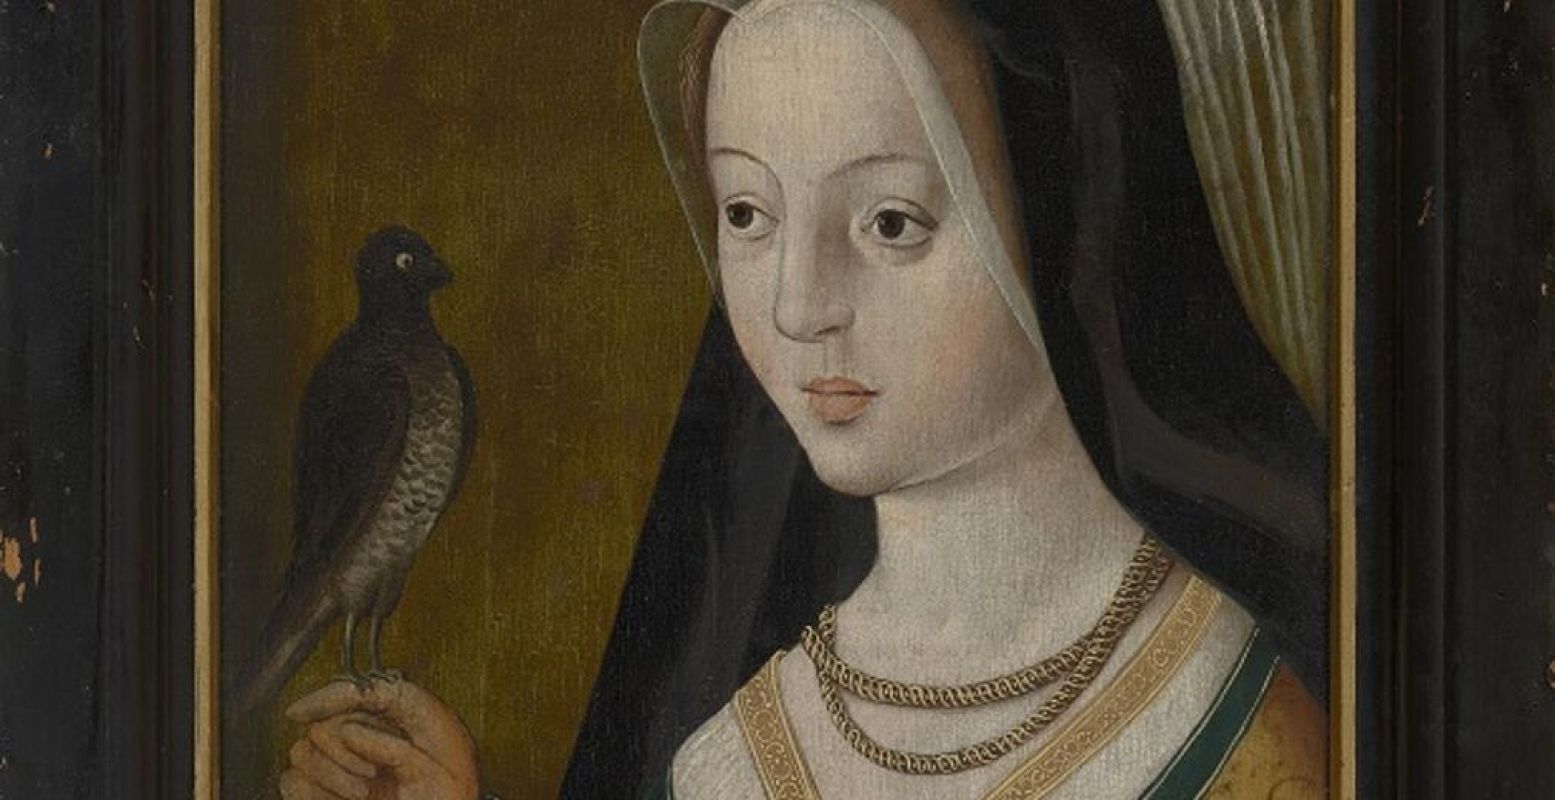 Foto: Portret Maria van Bourgondië, 1532-1540, Kasteel van Gaasbeek © www.lukasweb.be - Art in Flanders vzw, foto Dominique Provost